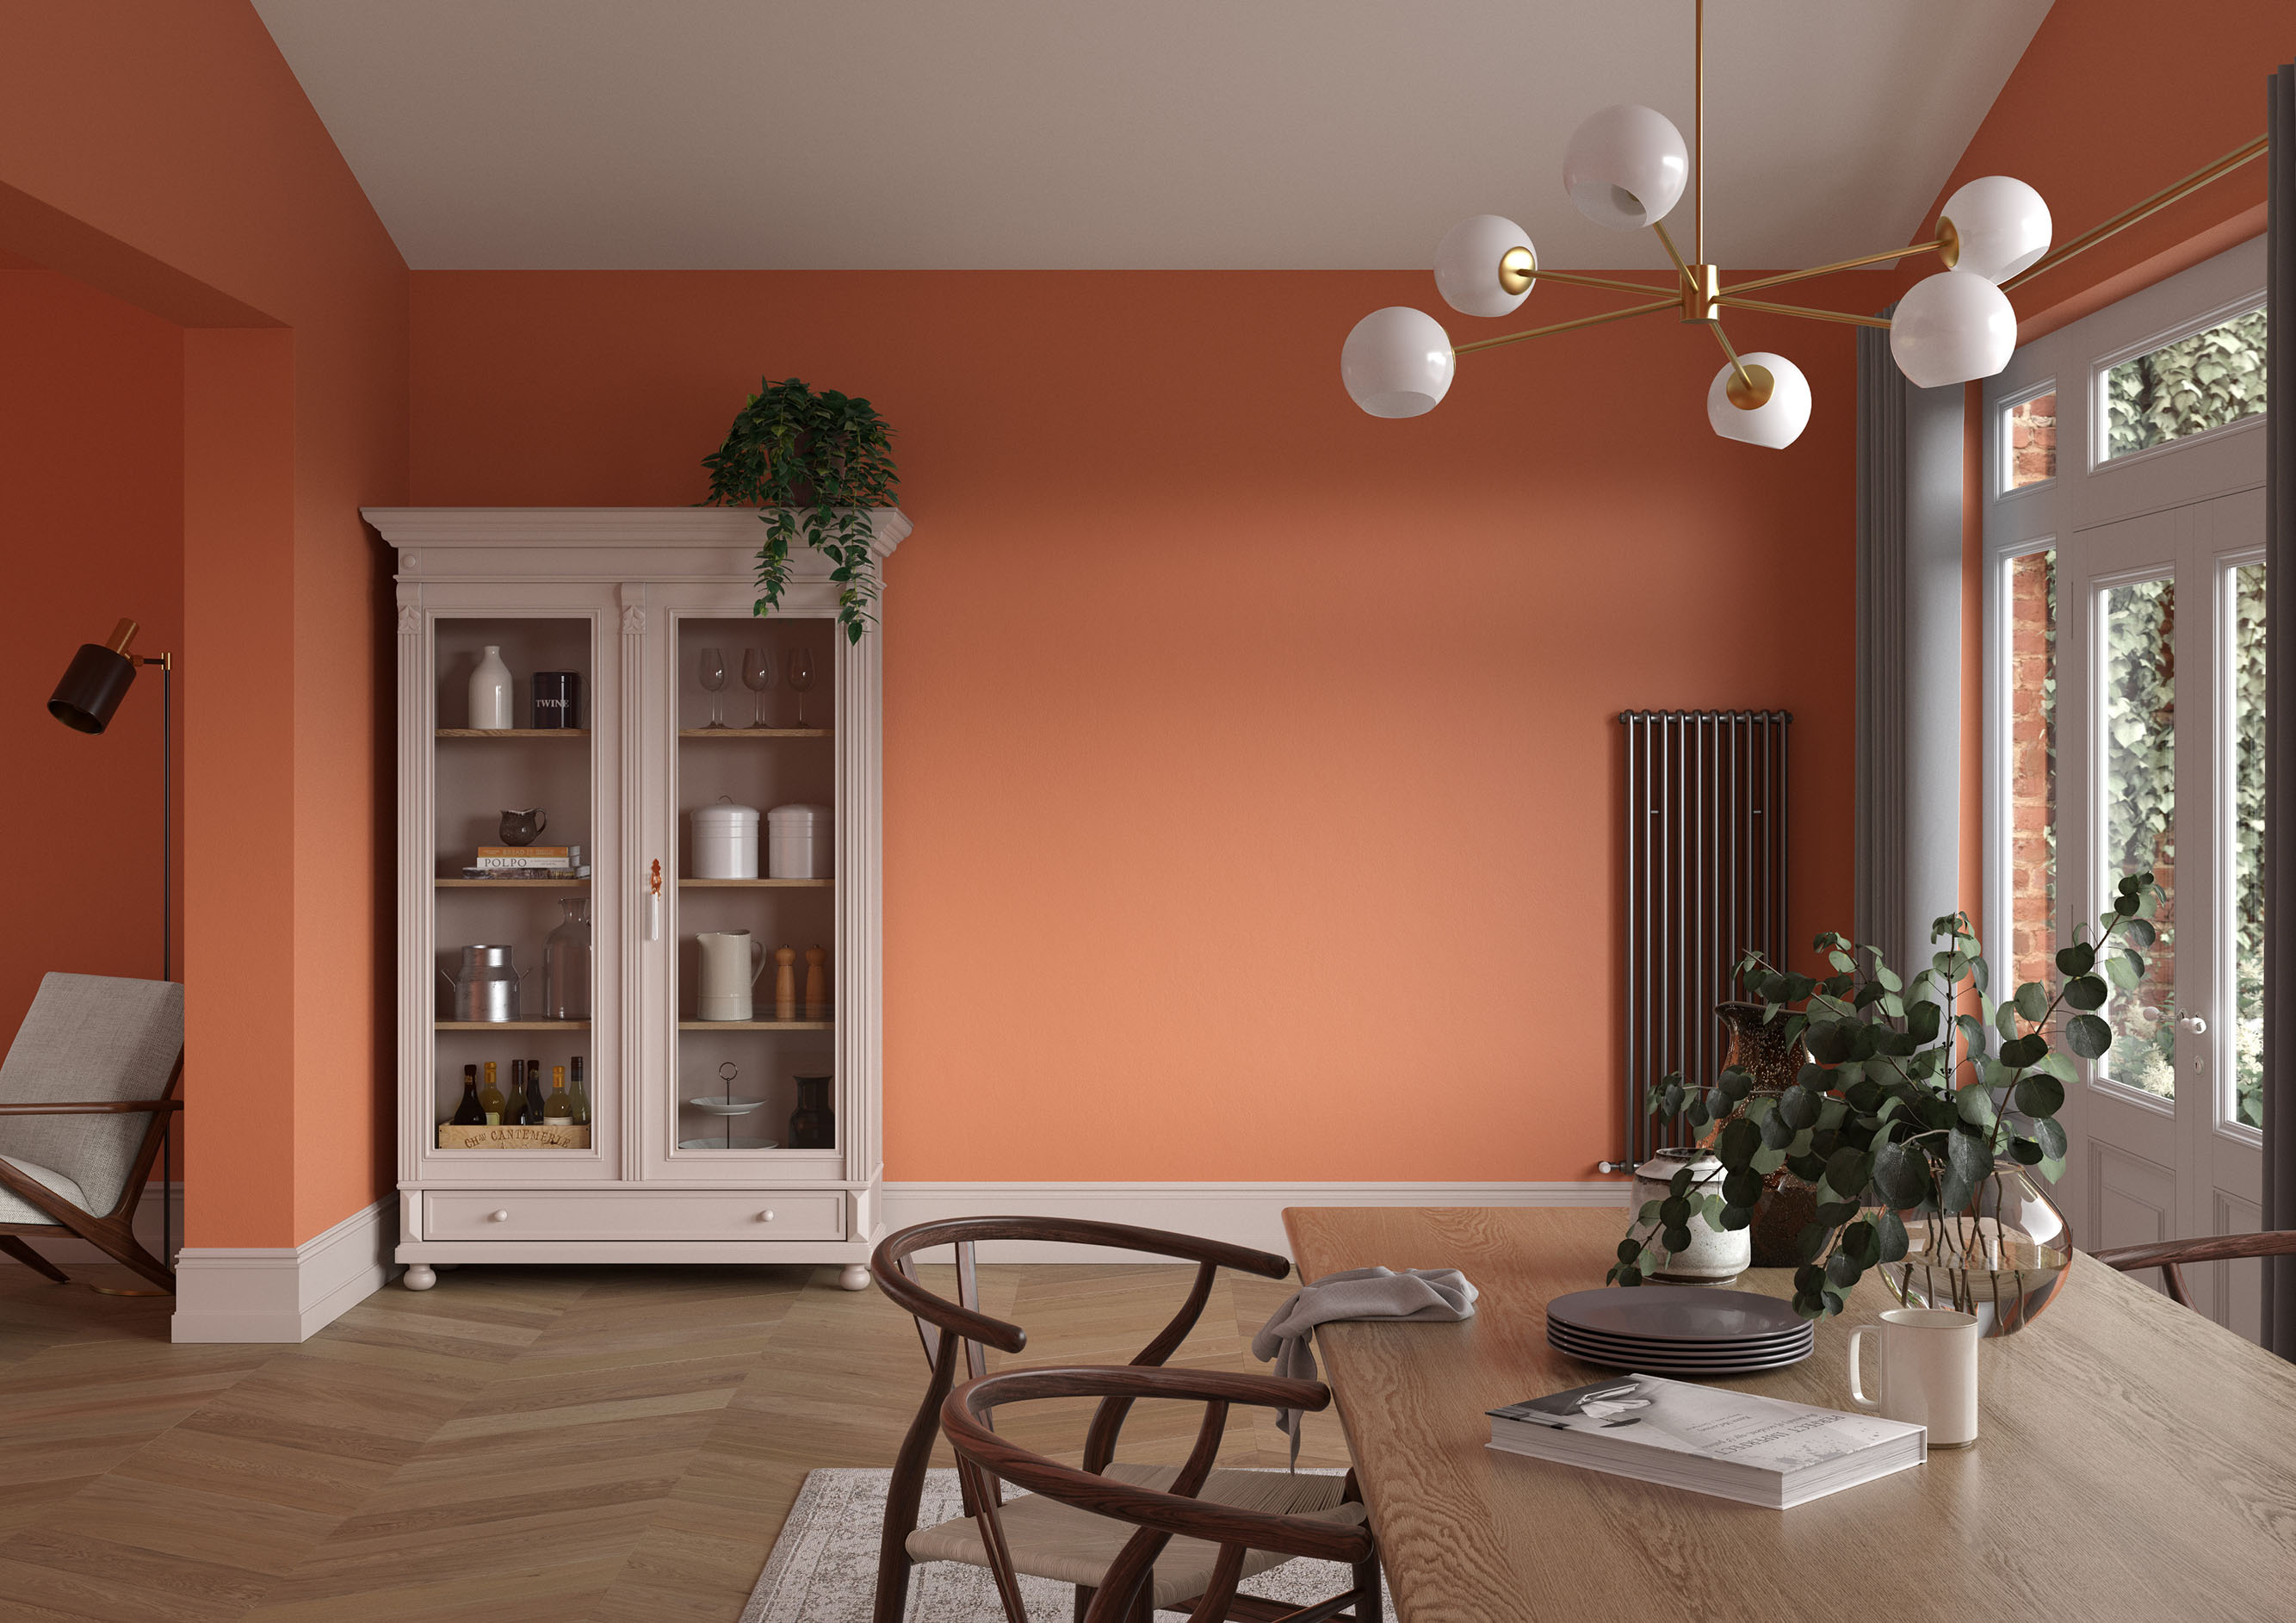 Diningroom   Wall   Inca Orange, Woodwork   Pumice Brown, Ceiling   Mallow White, Dresser   Pumice Brown